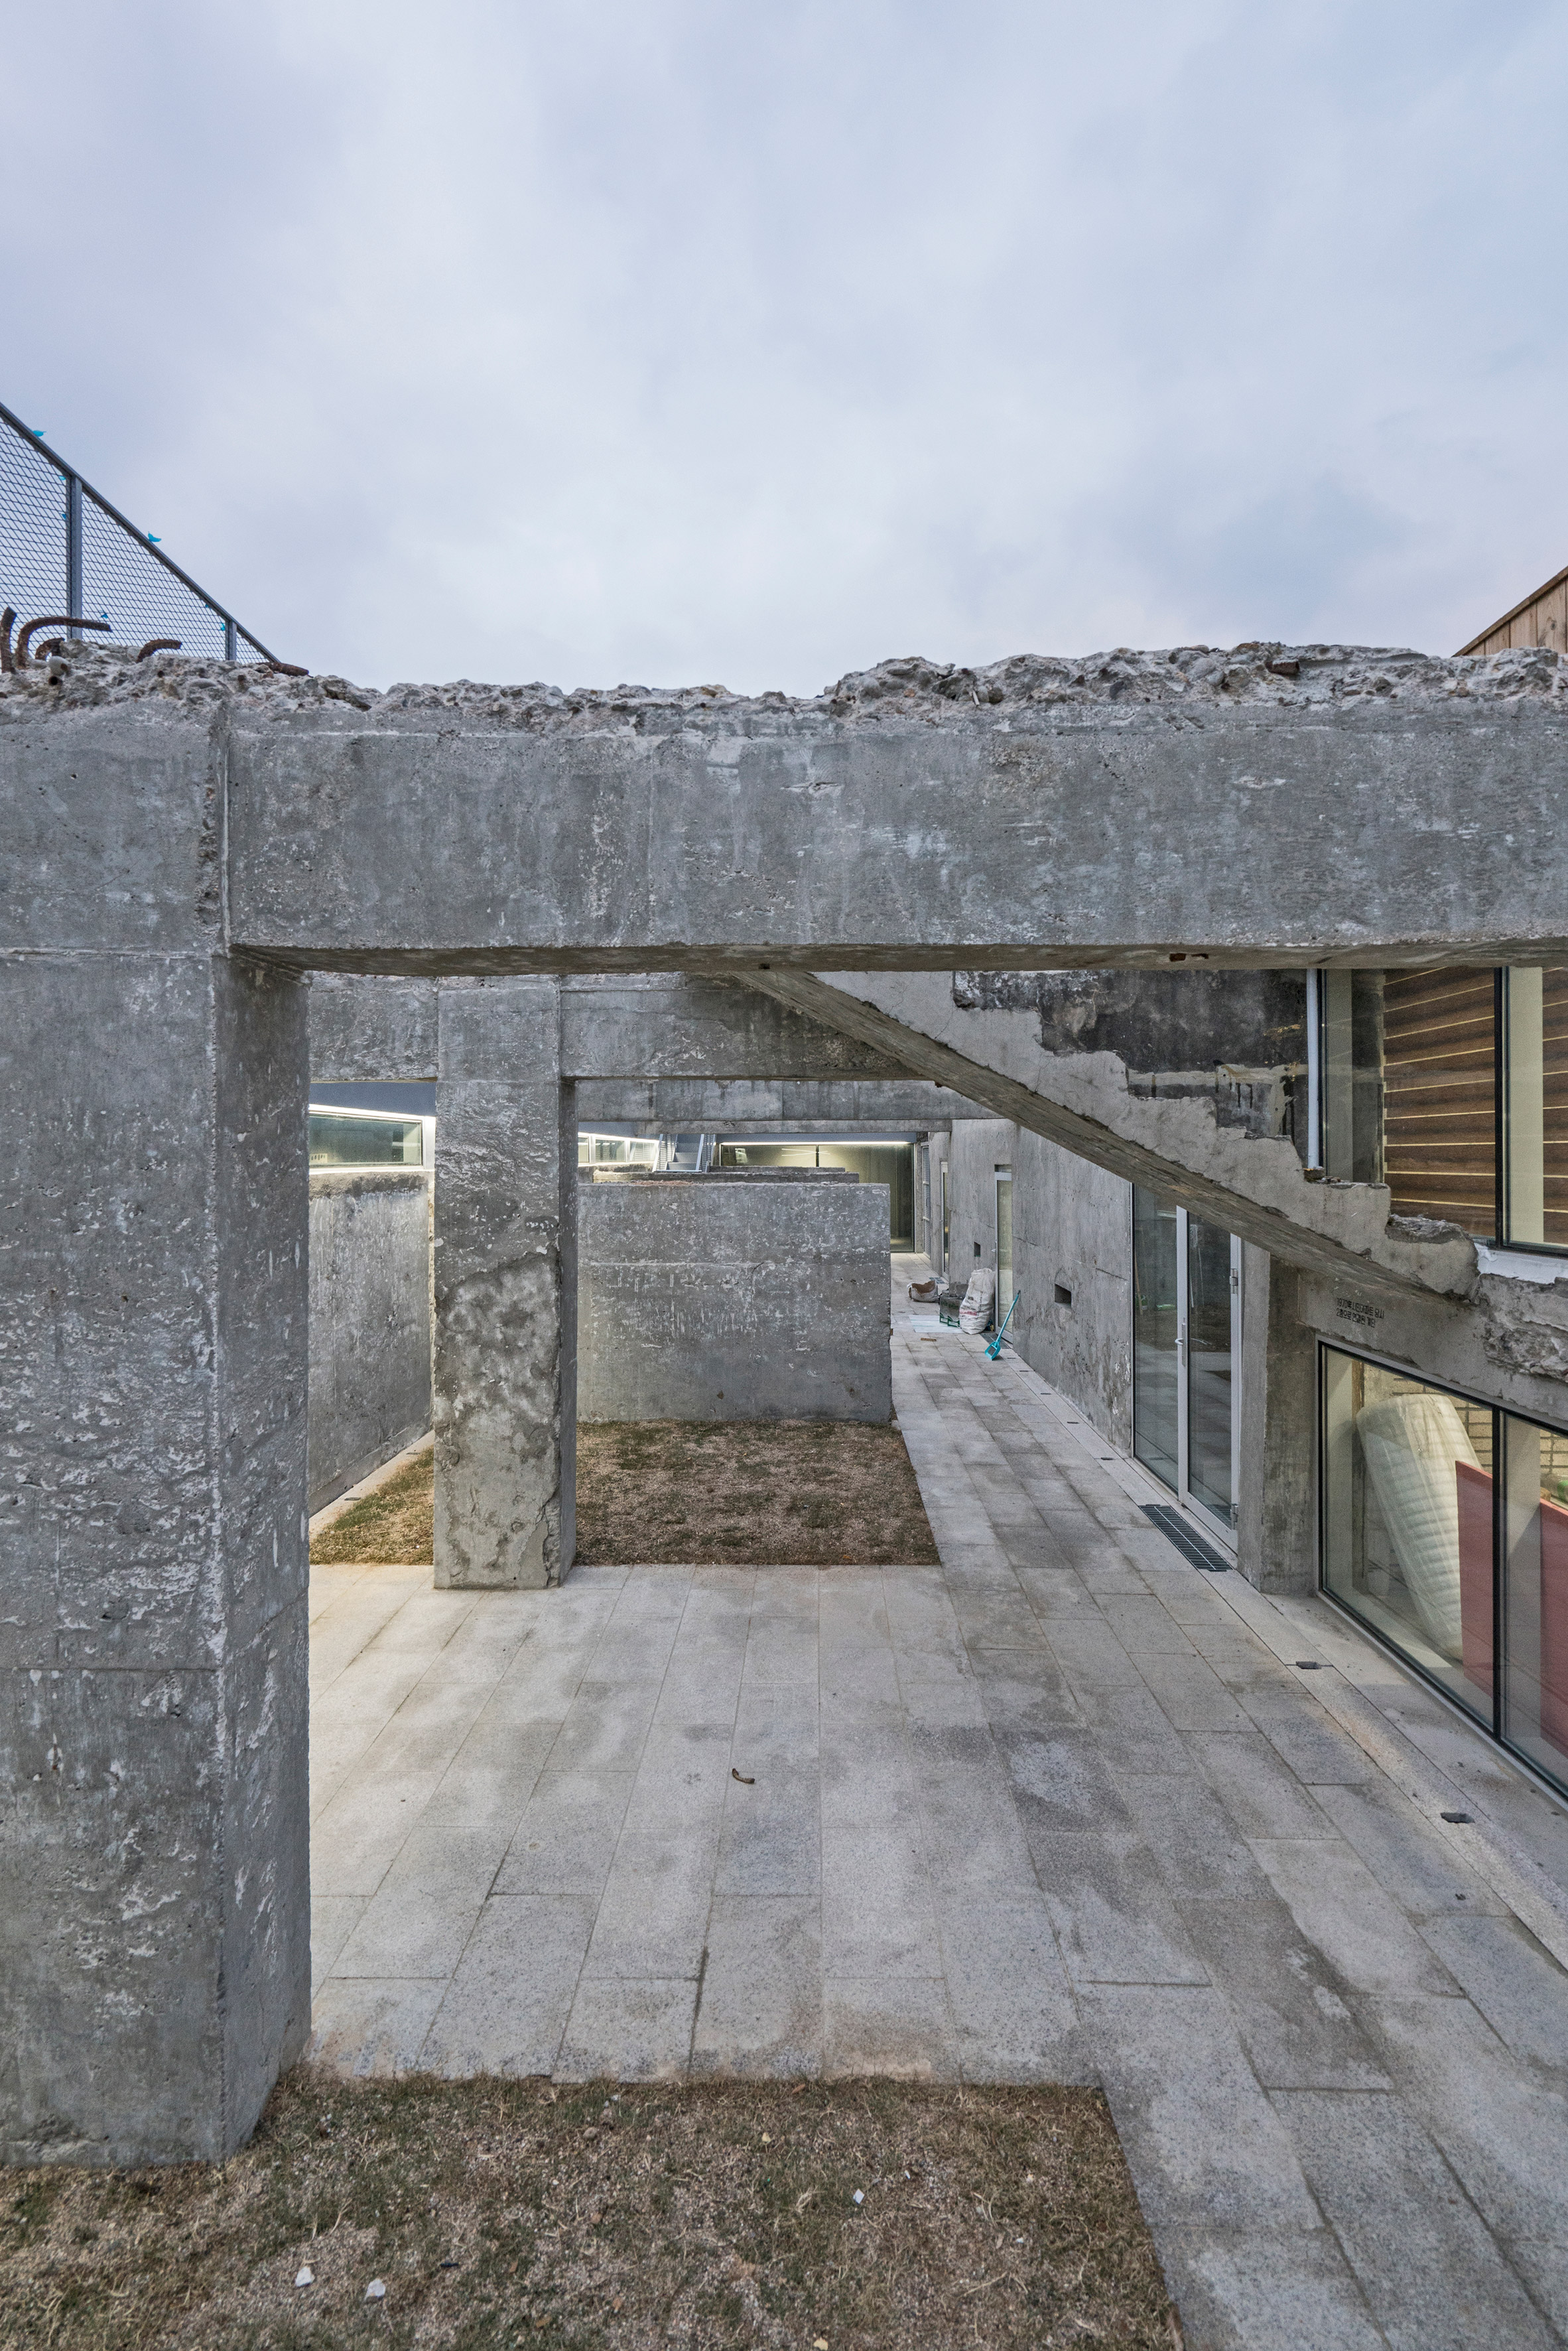 CoRe Architects converts Korean War bunker into community arts centre